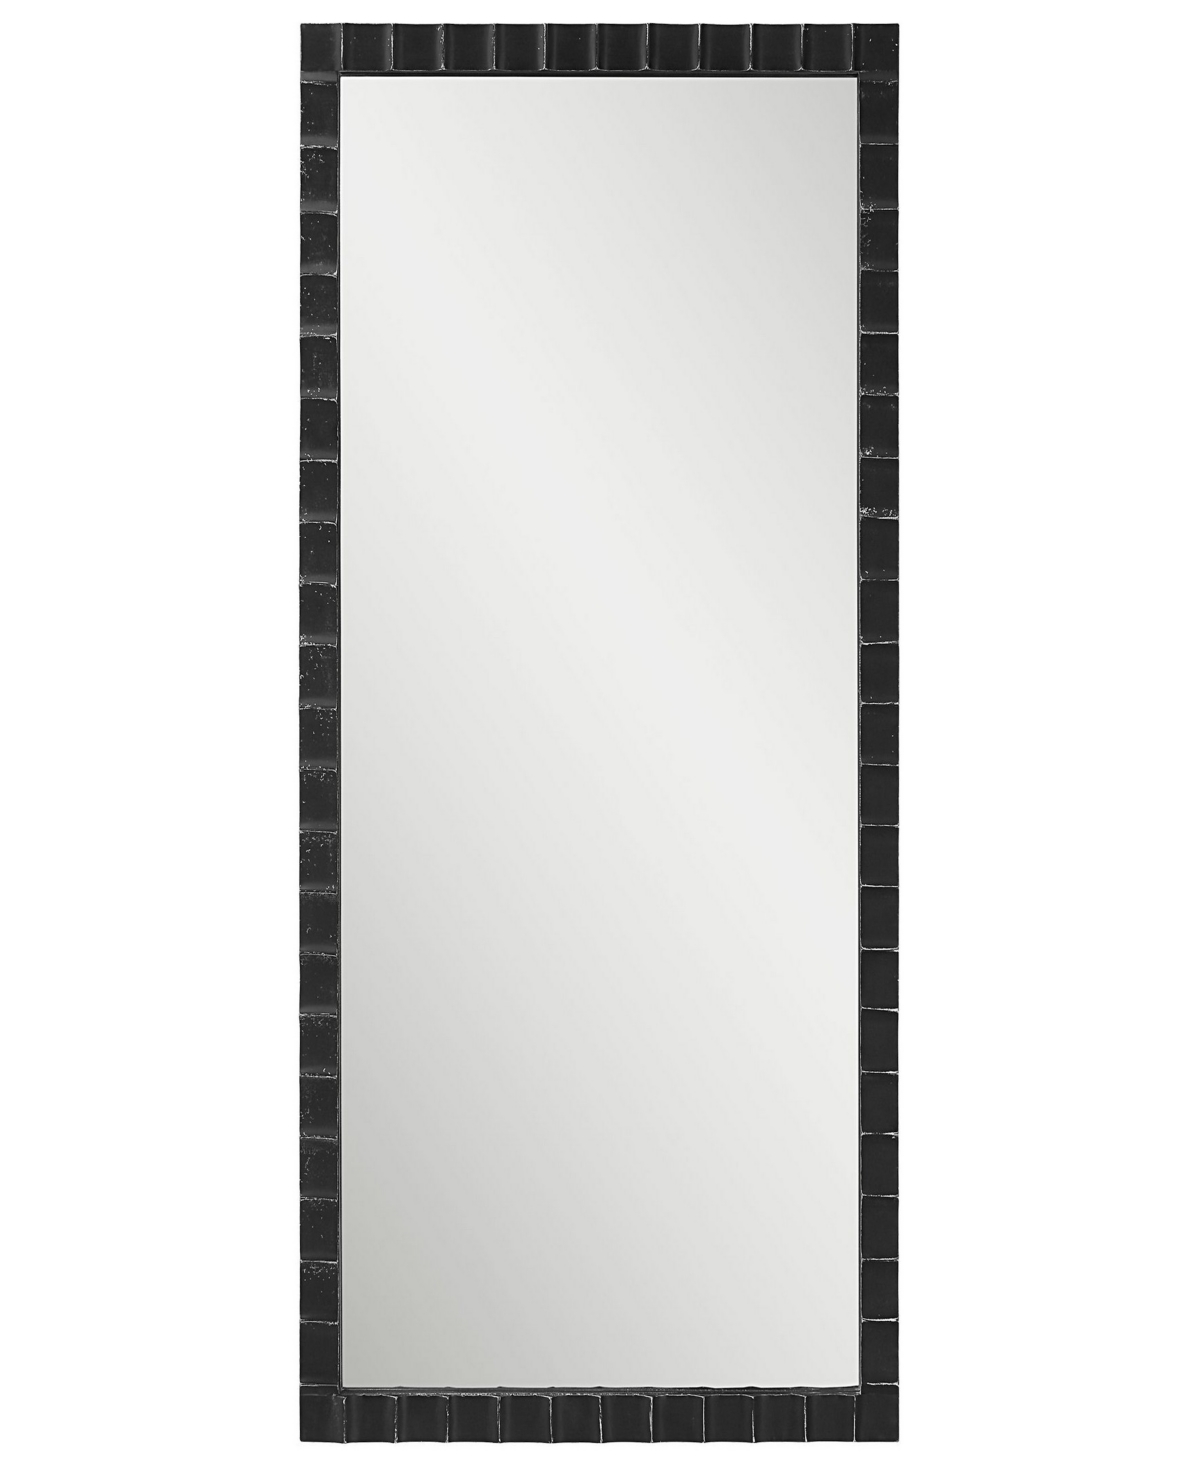 Dandridge Industrial Mirror - Black